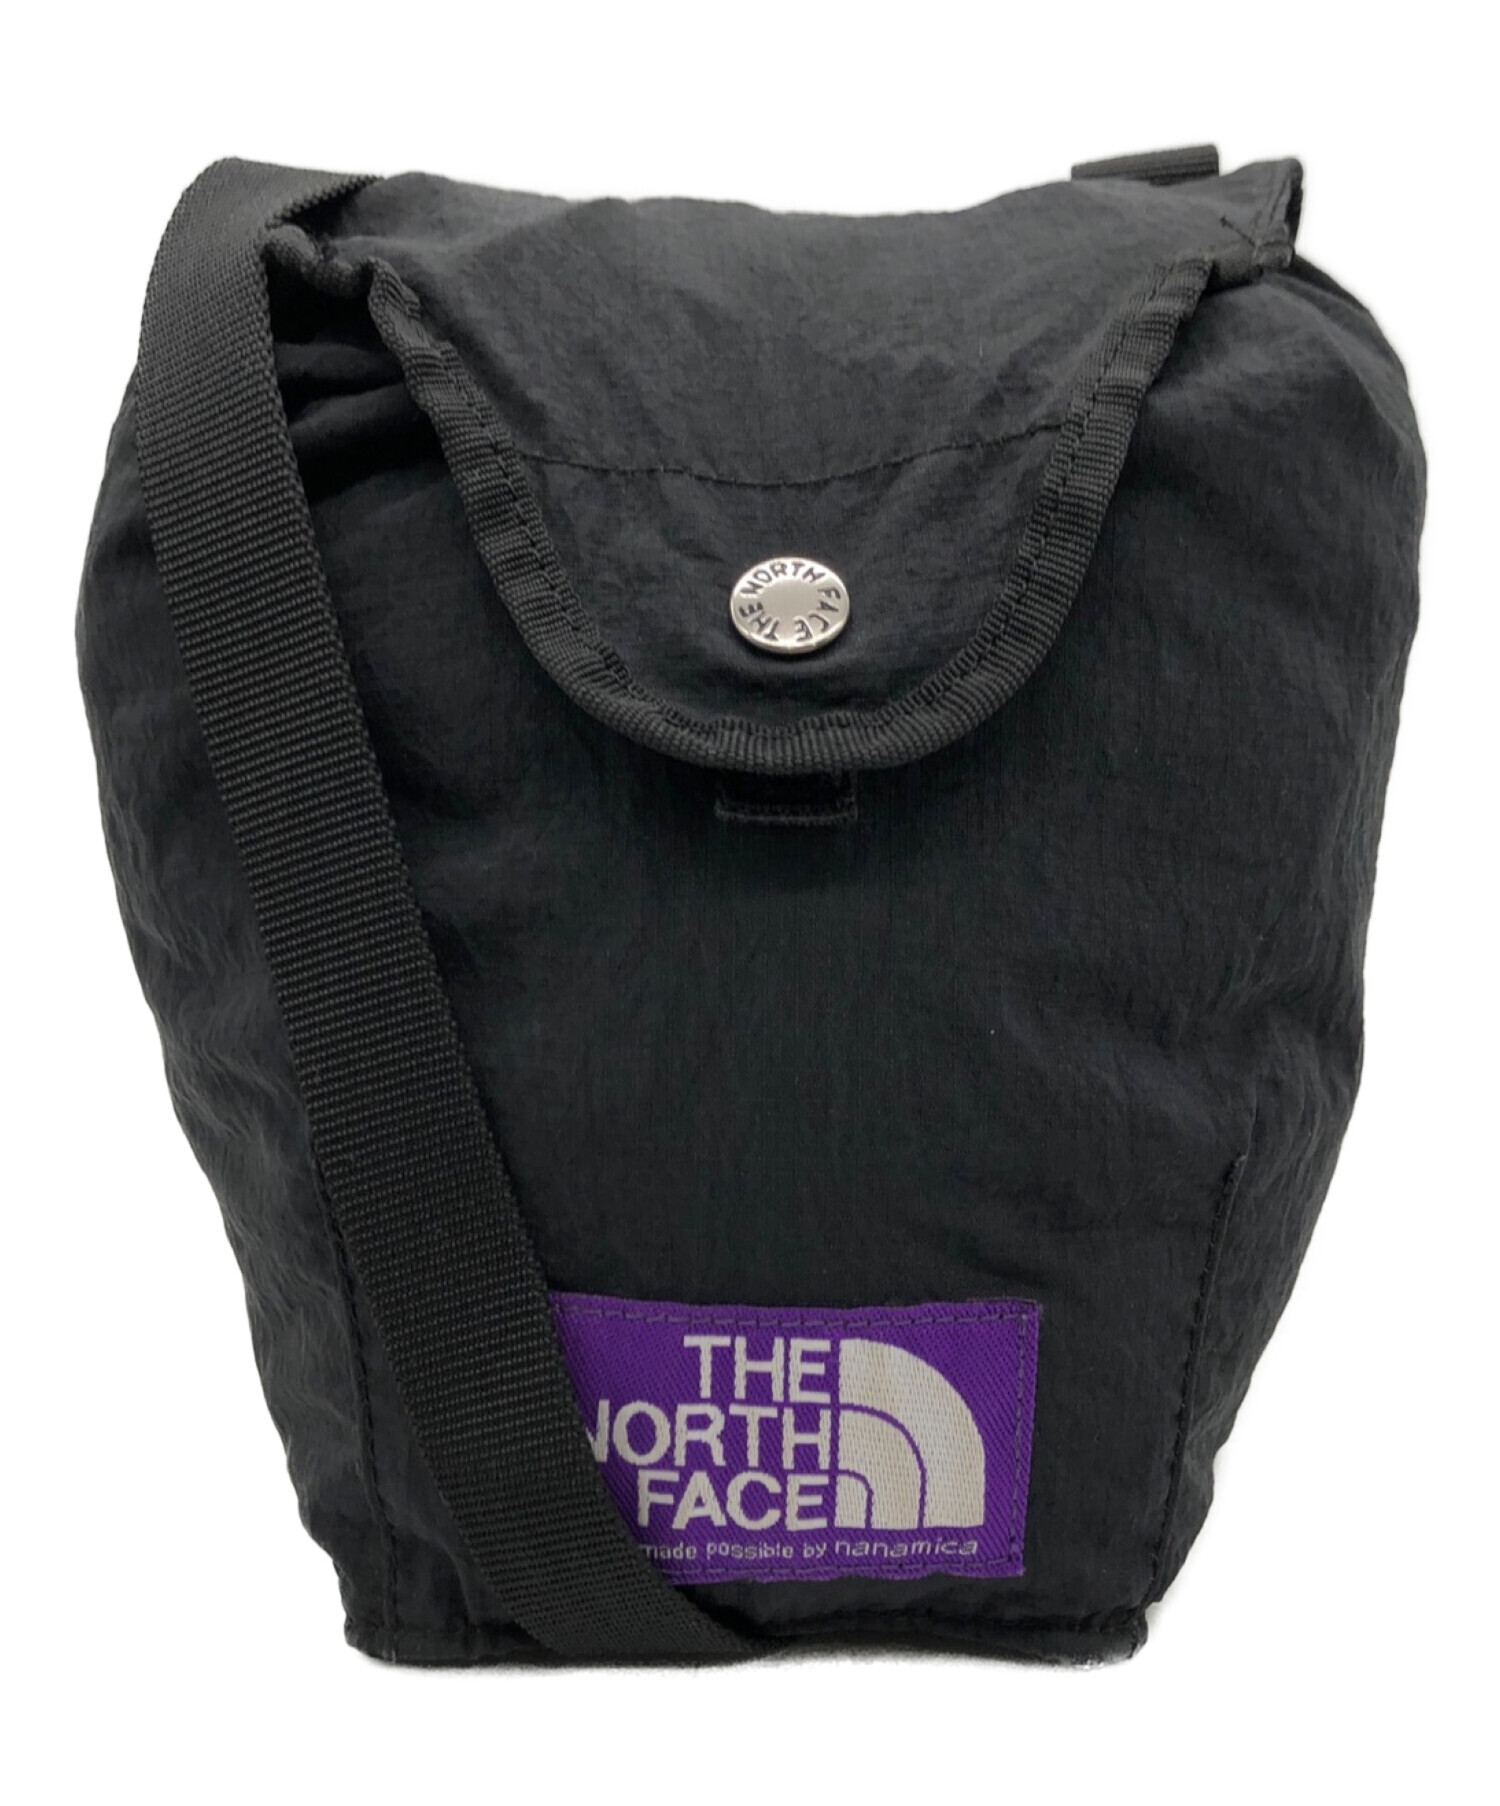 THE NORTHFACE PURPLELABEL (ザ ノースフェイス パープルレーベル) CORDURA Ripstop Small  Shoulder Bag